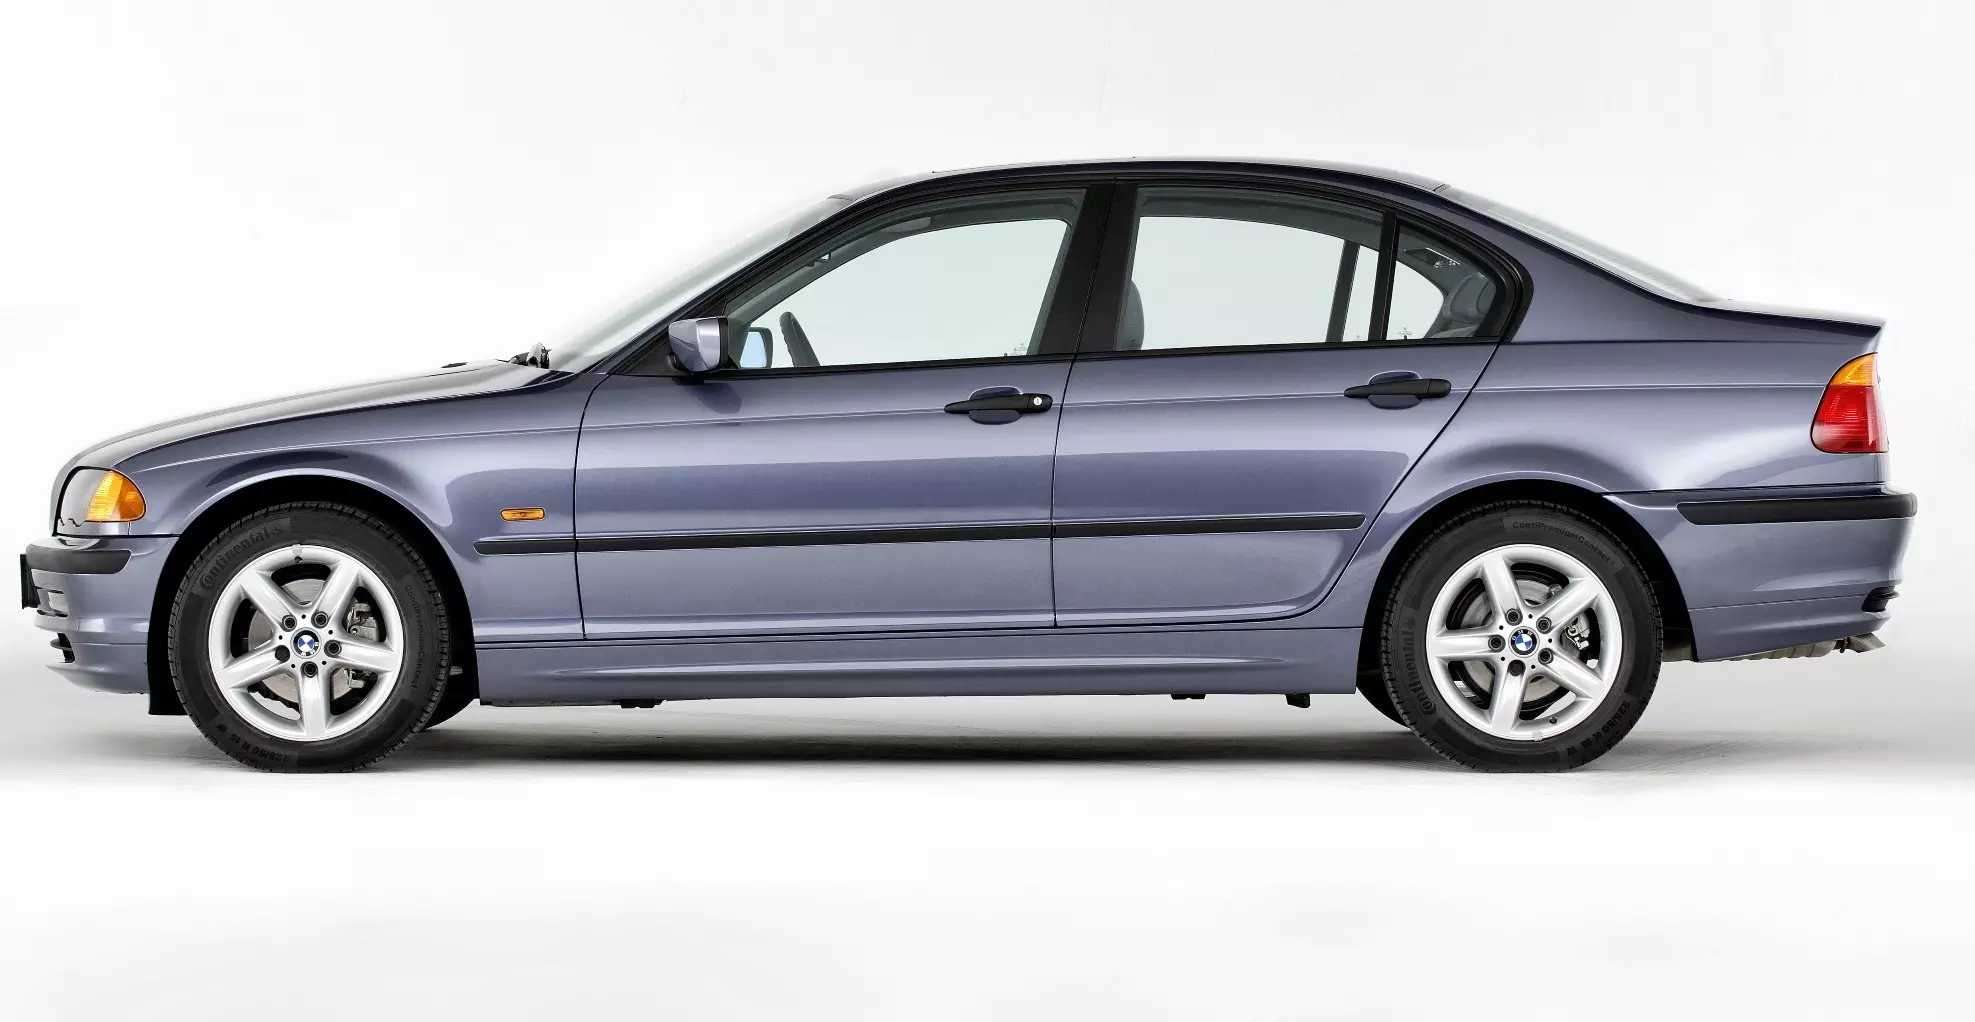 BMW 3-Series E46 common problems (1998-2007) | Haynes Manuals